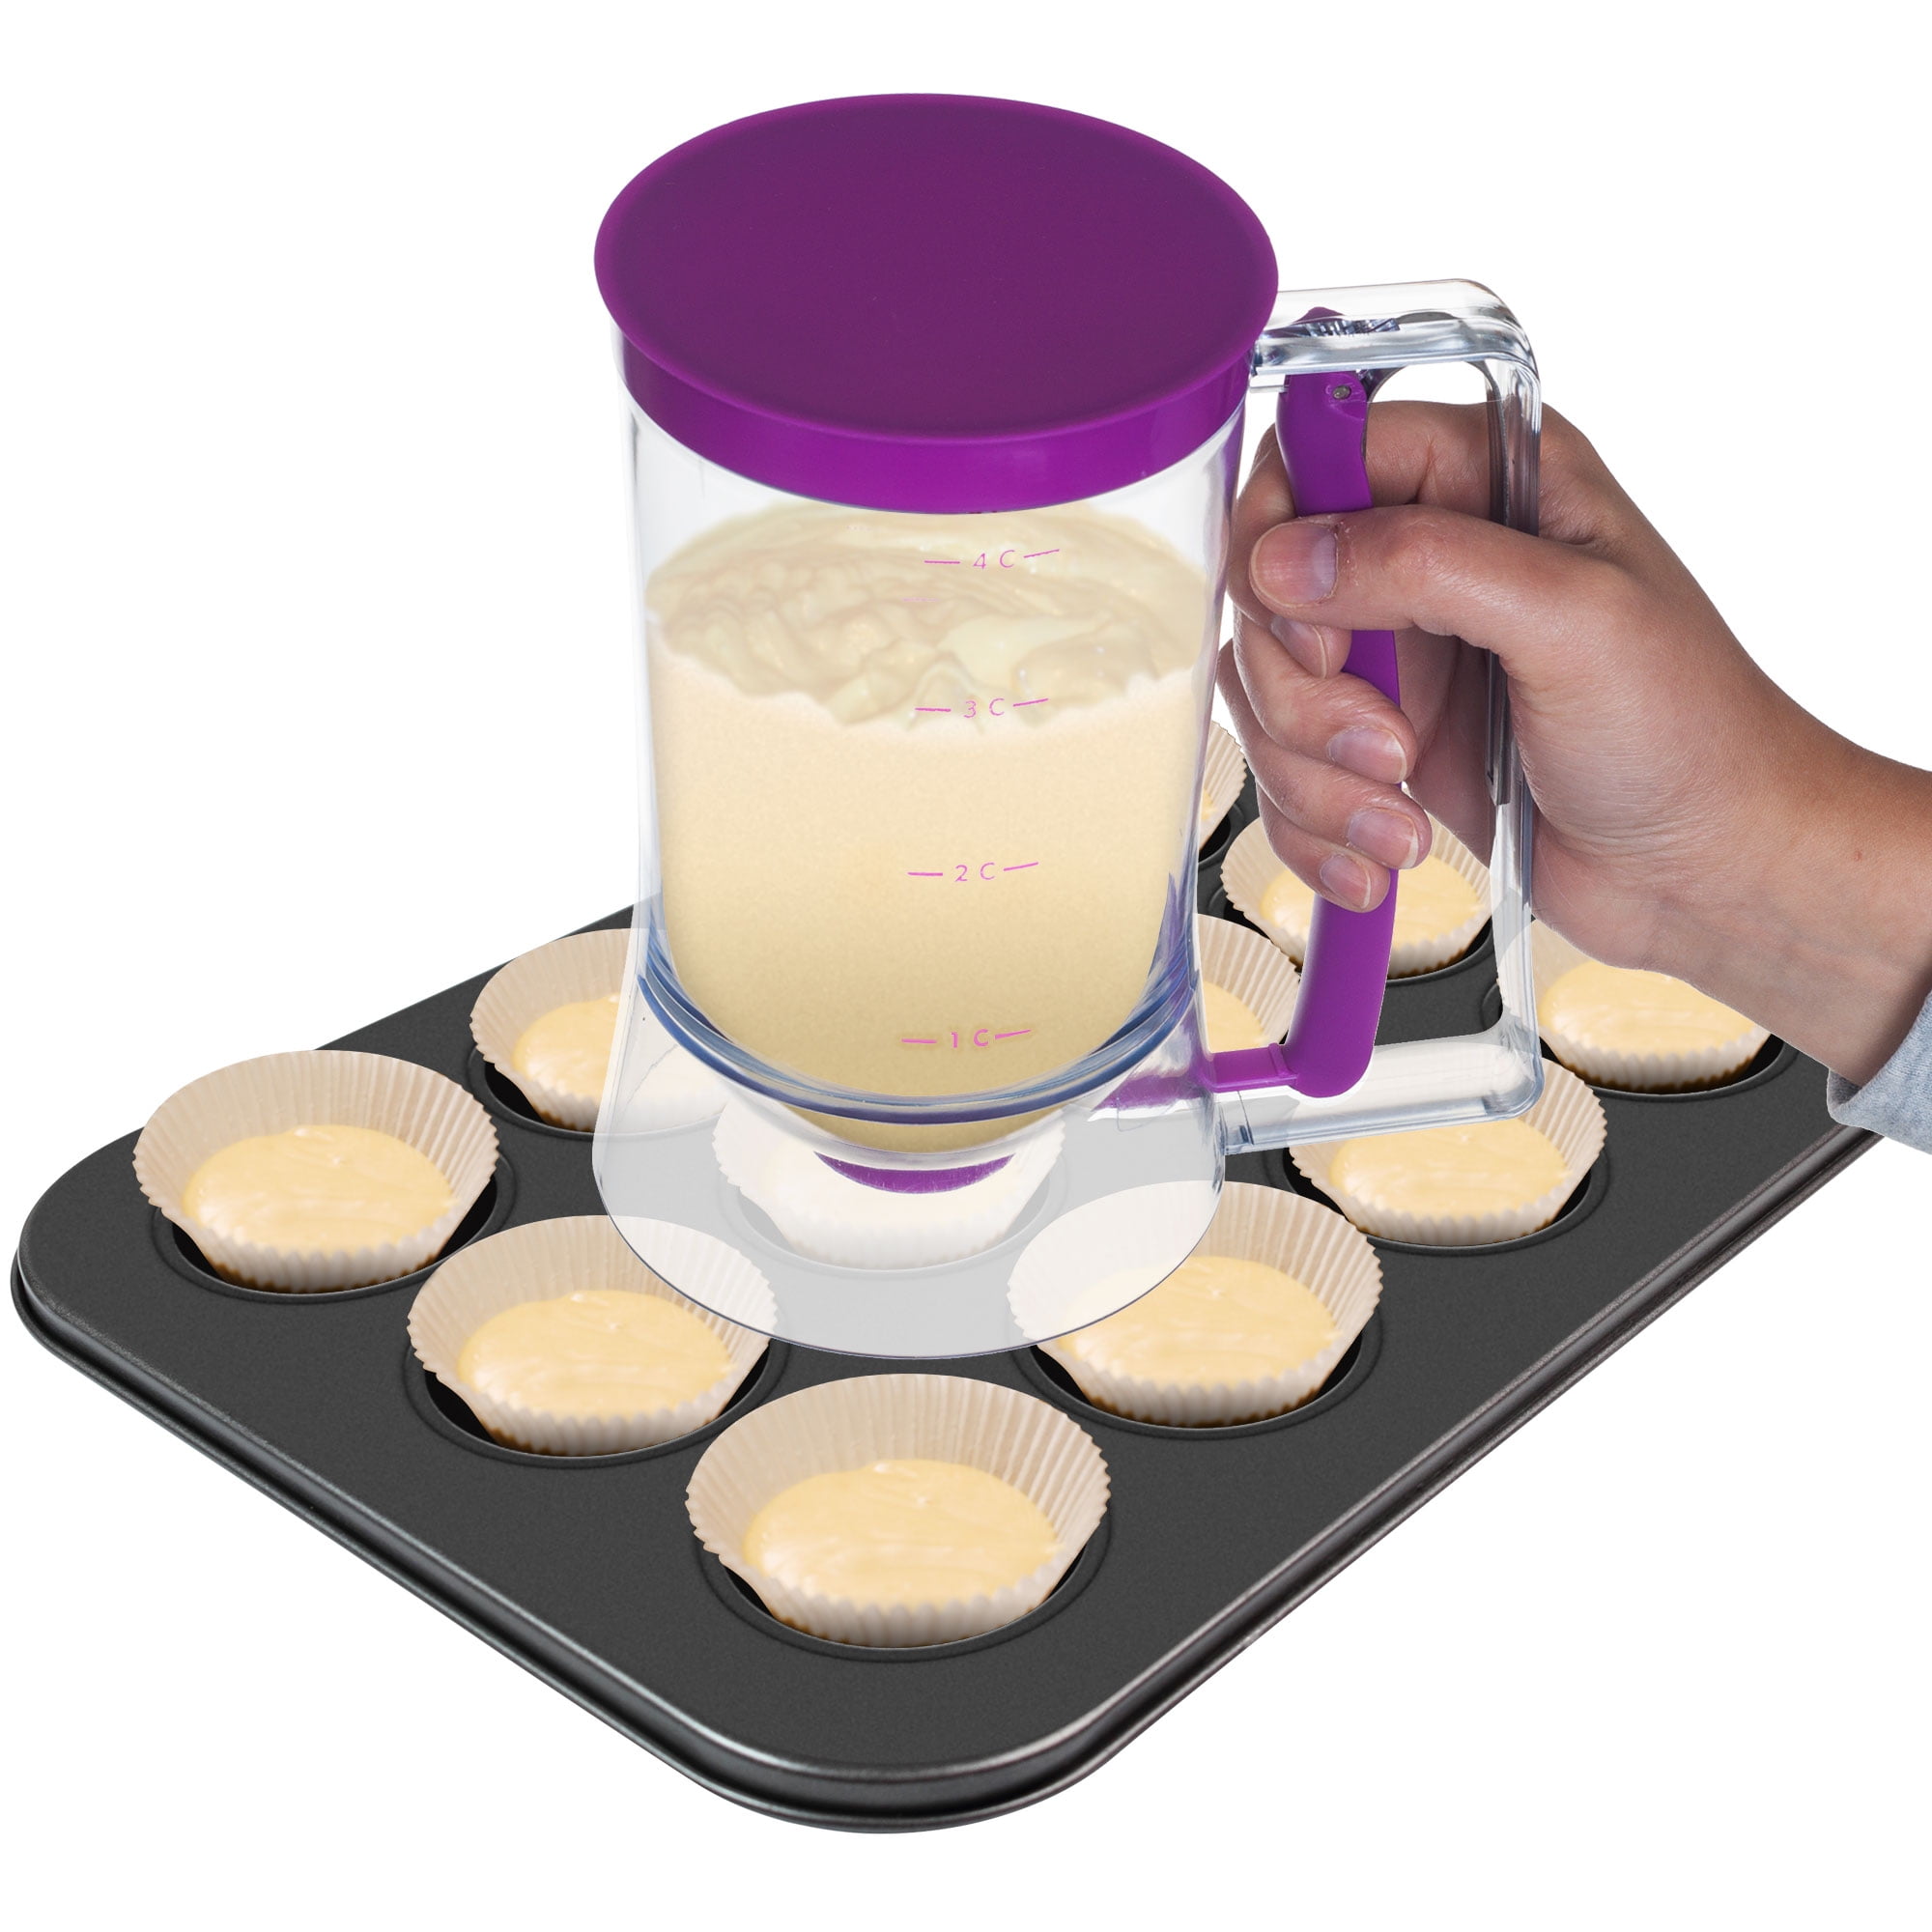 pancake batter dispenser with measuring label